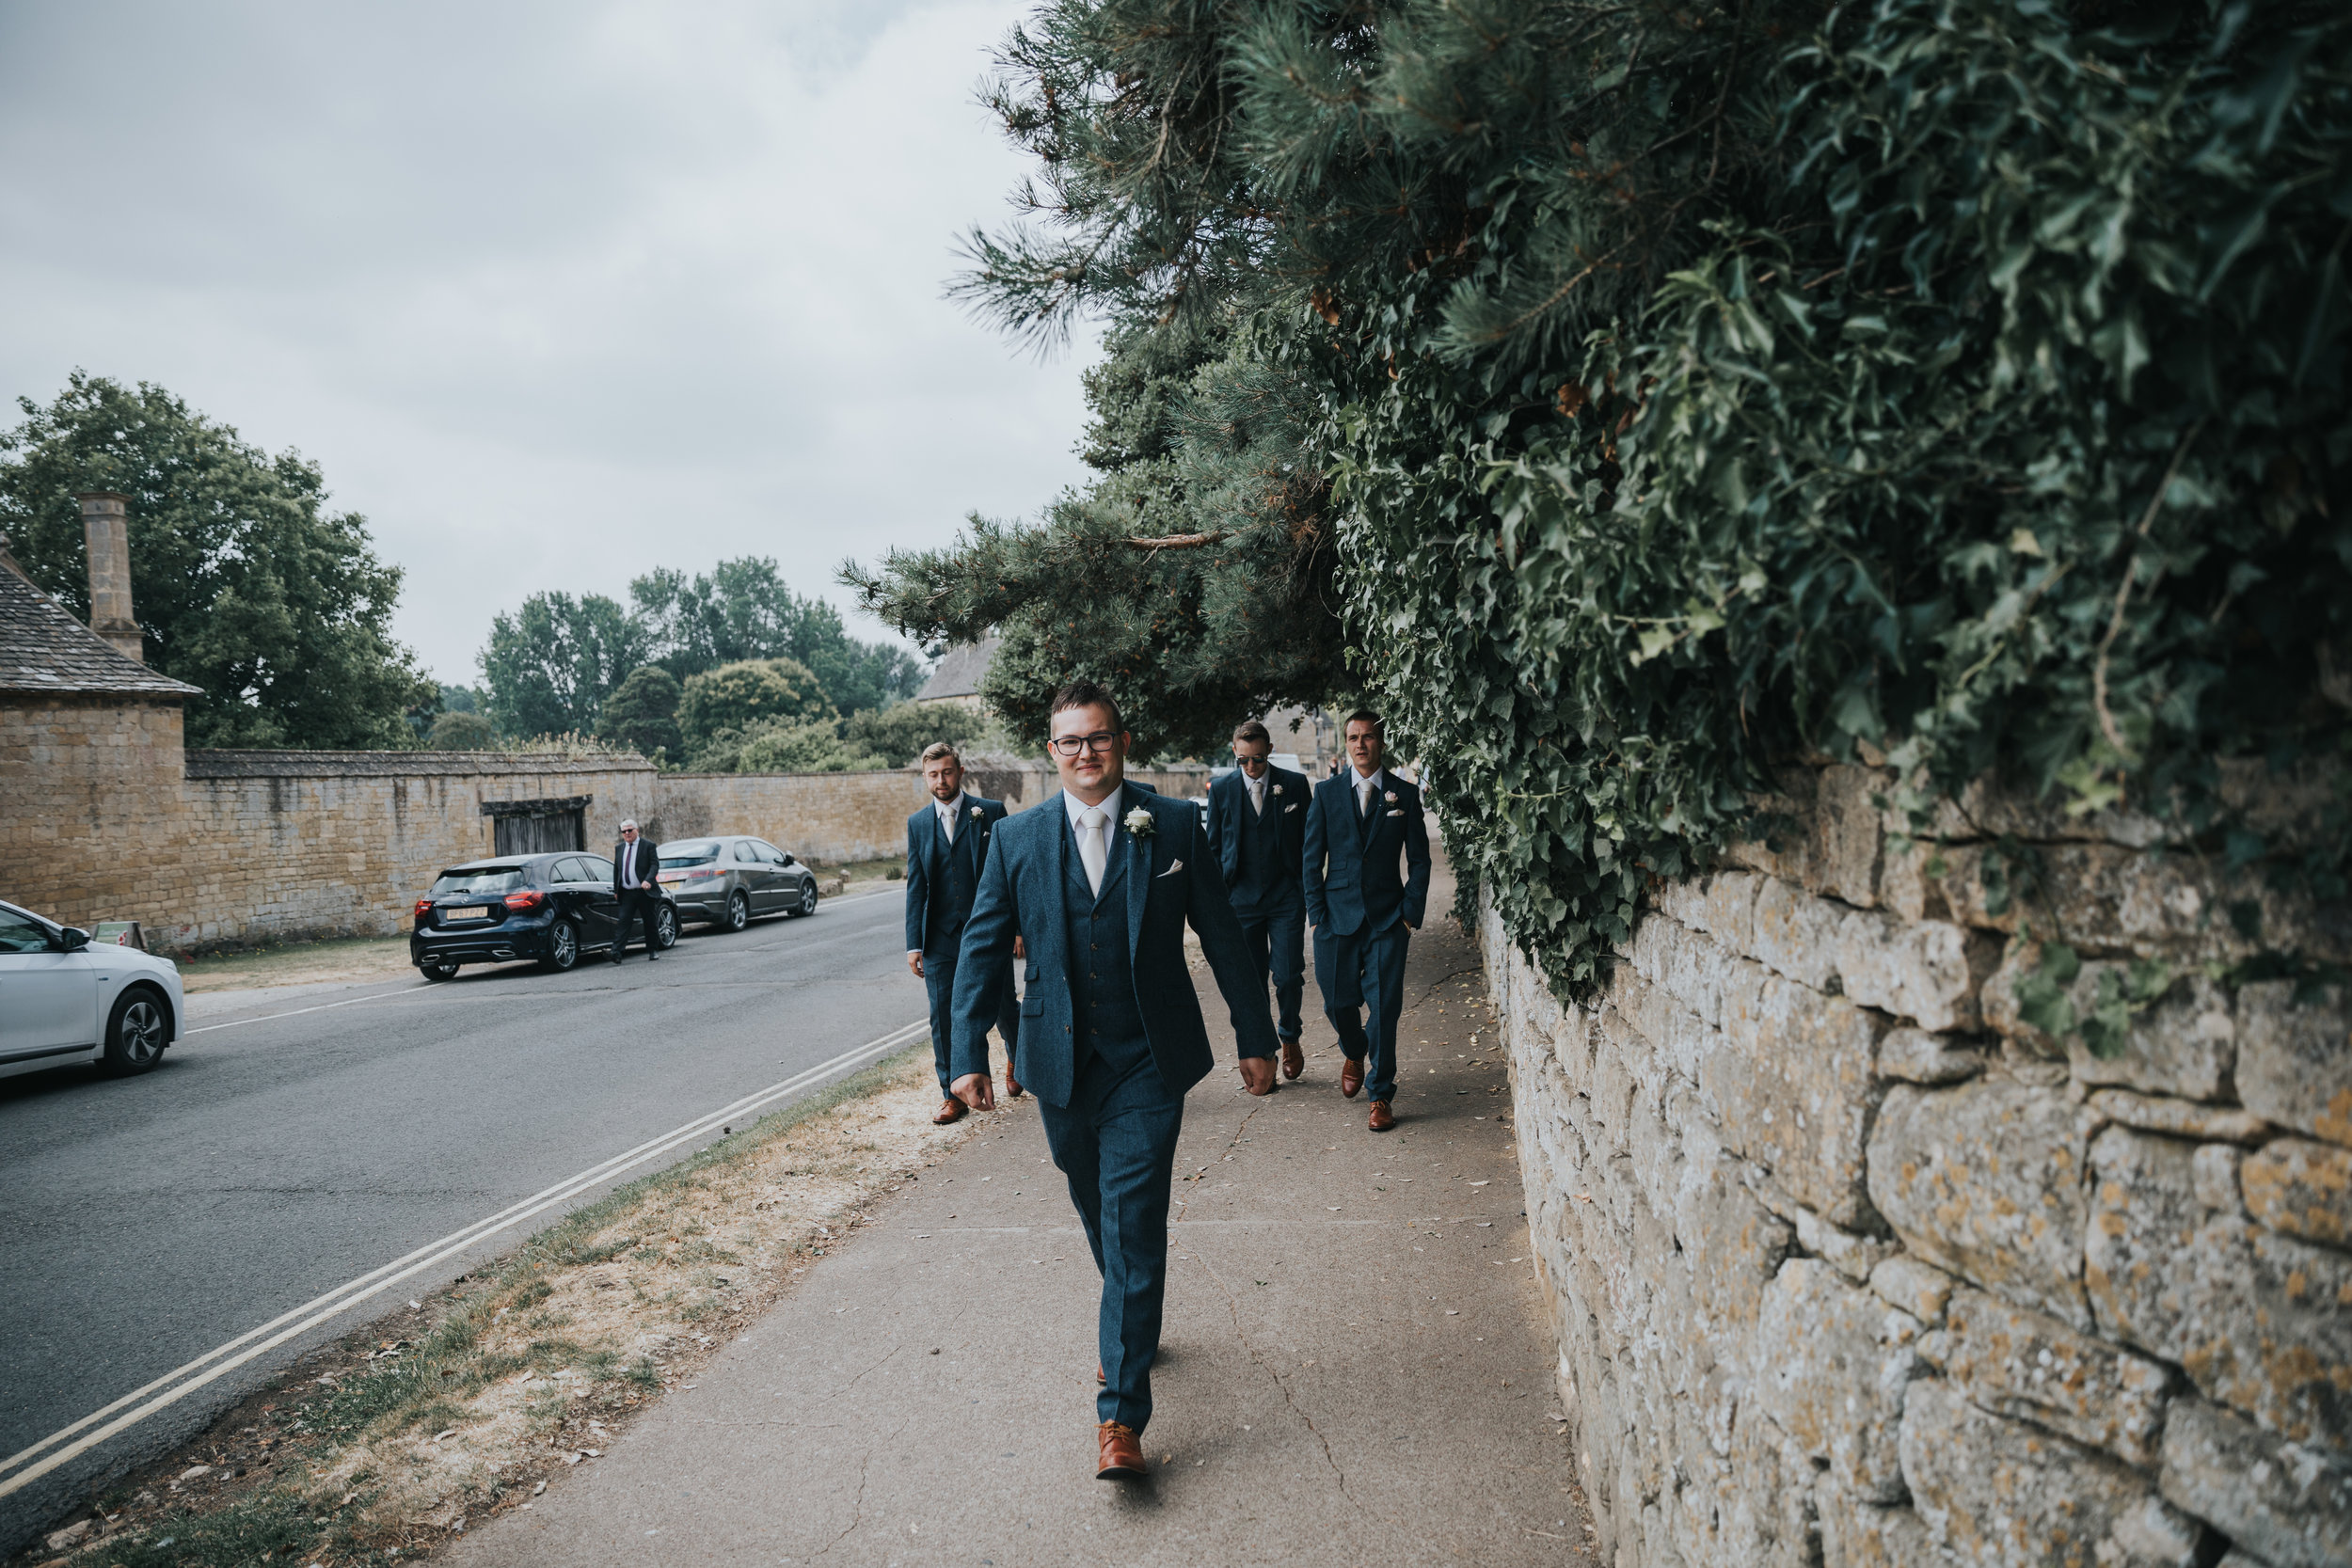 Groom leading his groomsmen to the church. (Copy)